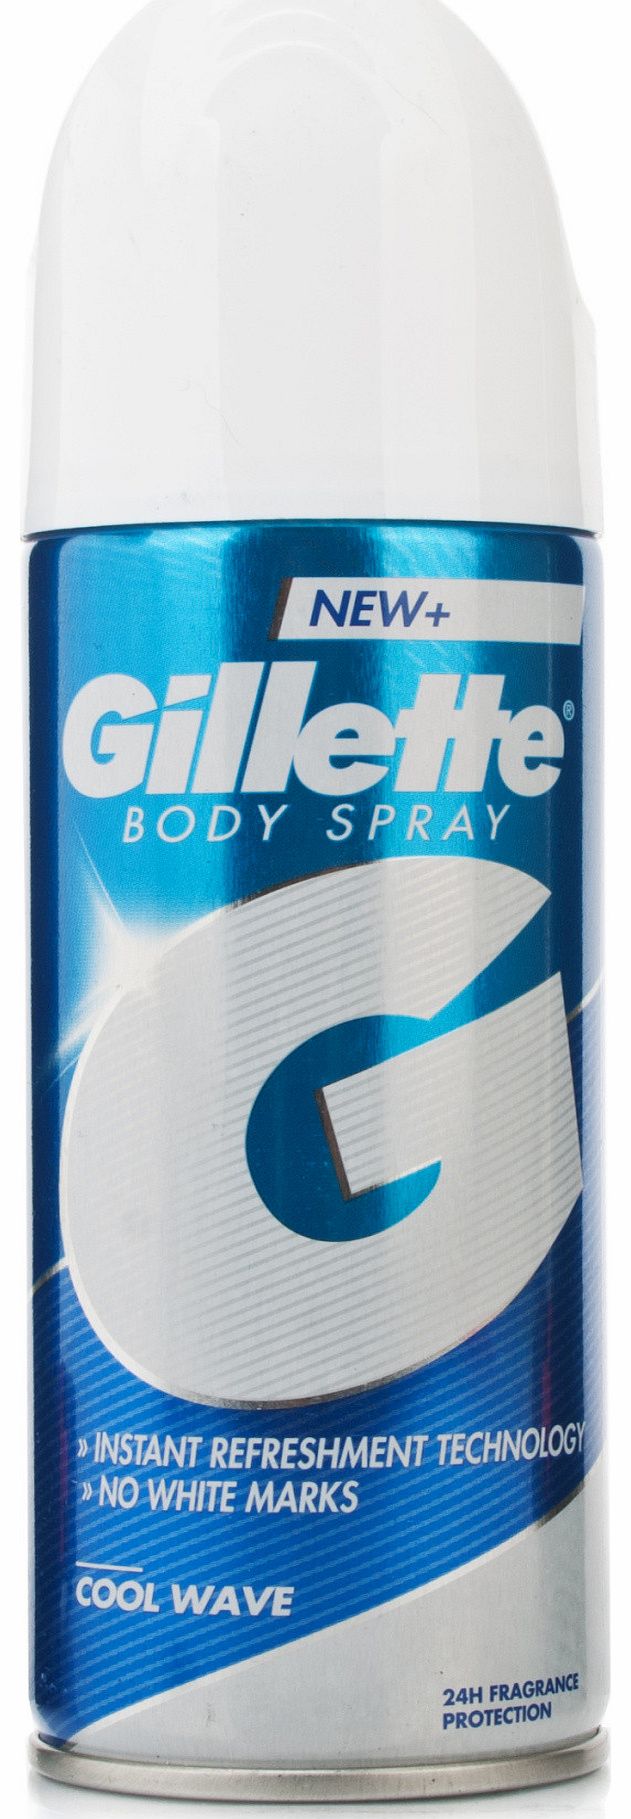 Gillette Cool Wave Body Spray